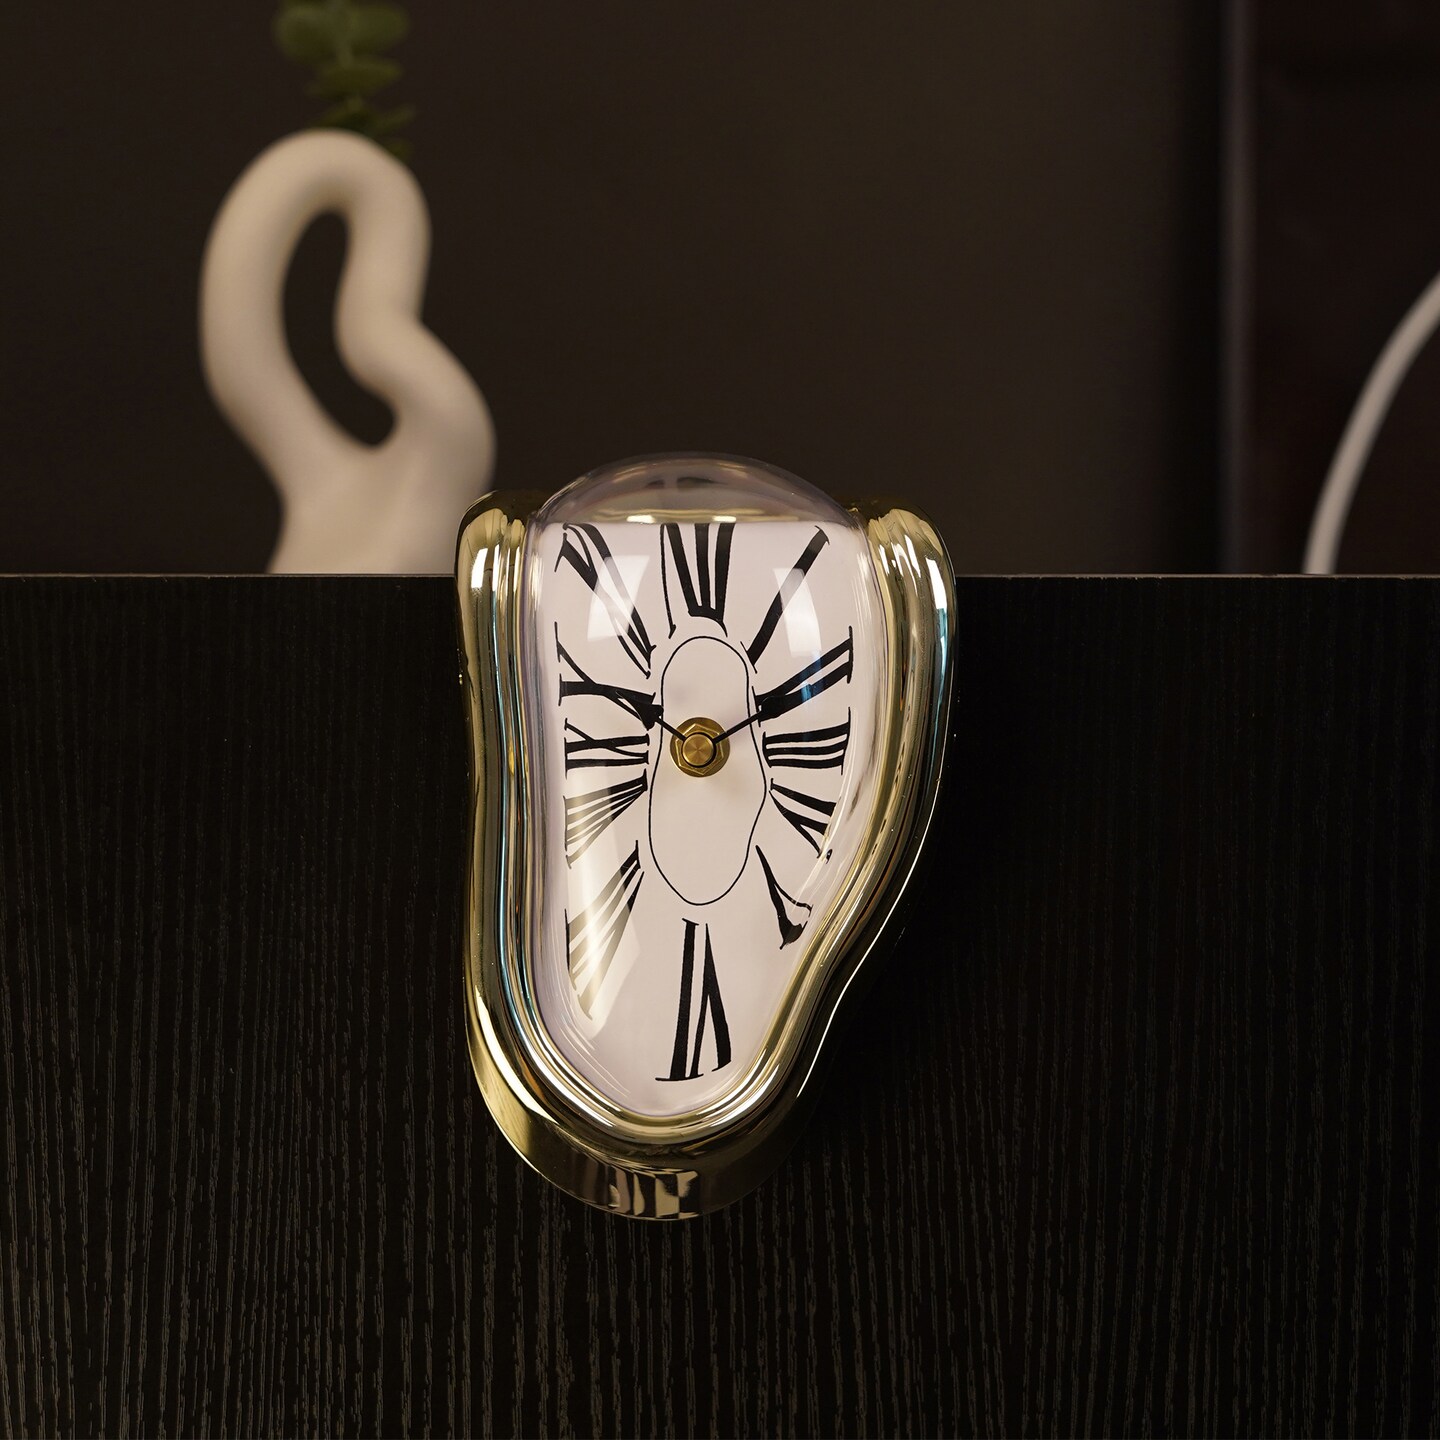 Dali Melting Tabletop Clock